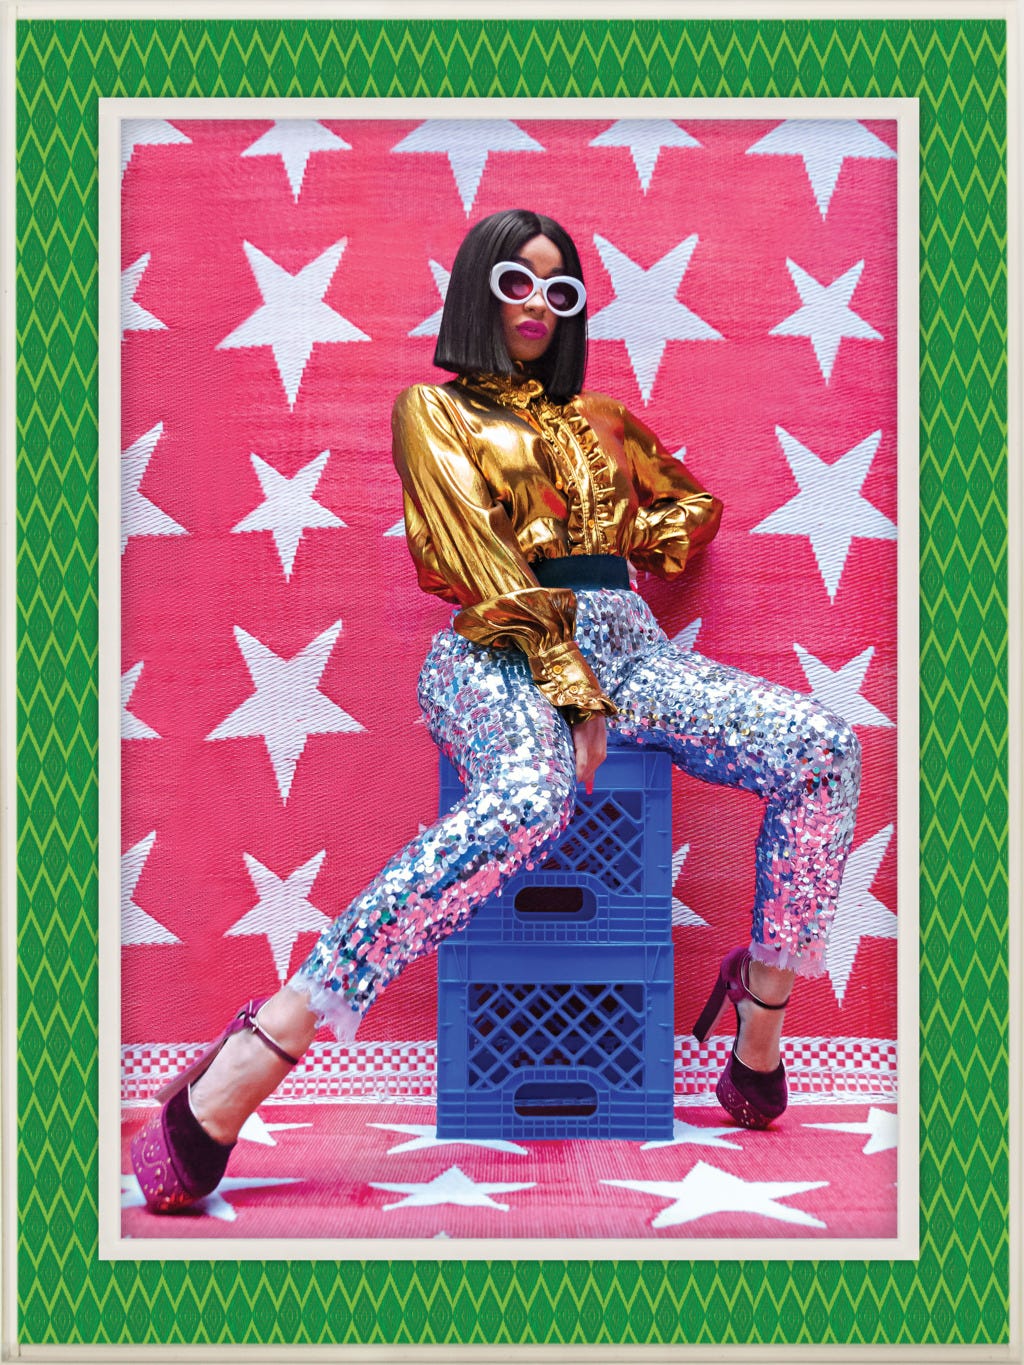 Meet Hassan Hajjaj, the 'Warhol of Marrakech' Who Shot Hip-Hop Star Cardi  B. for New York Mag